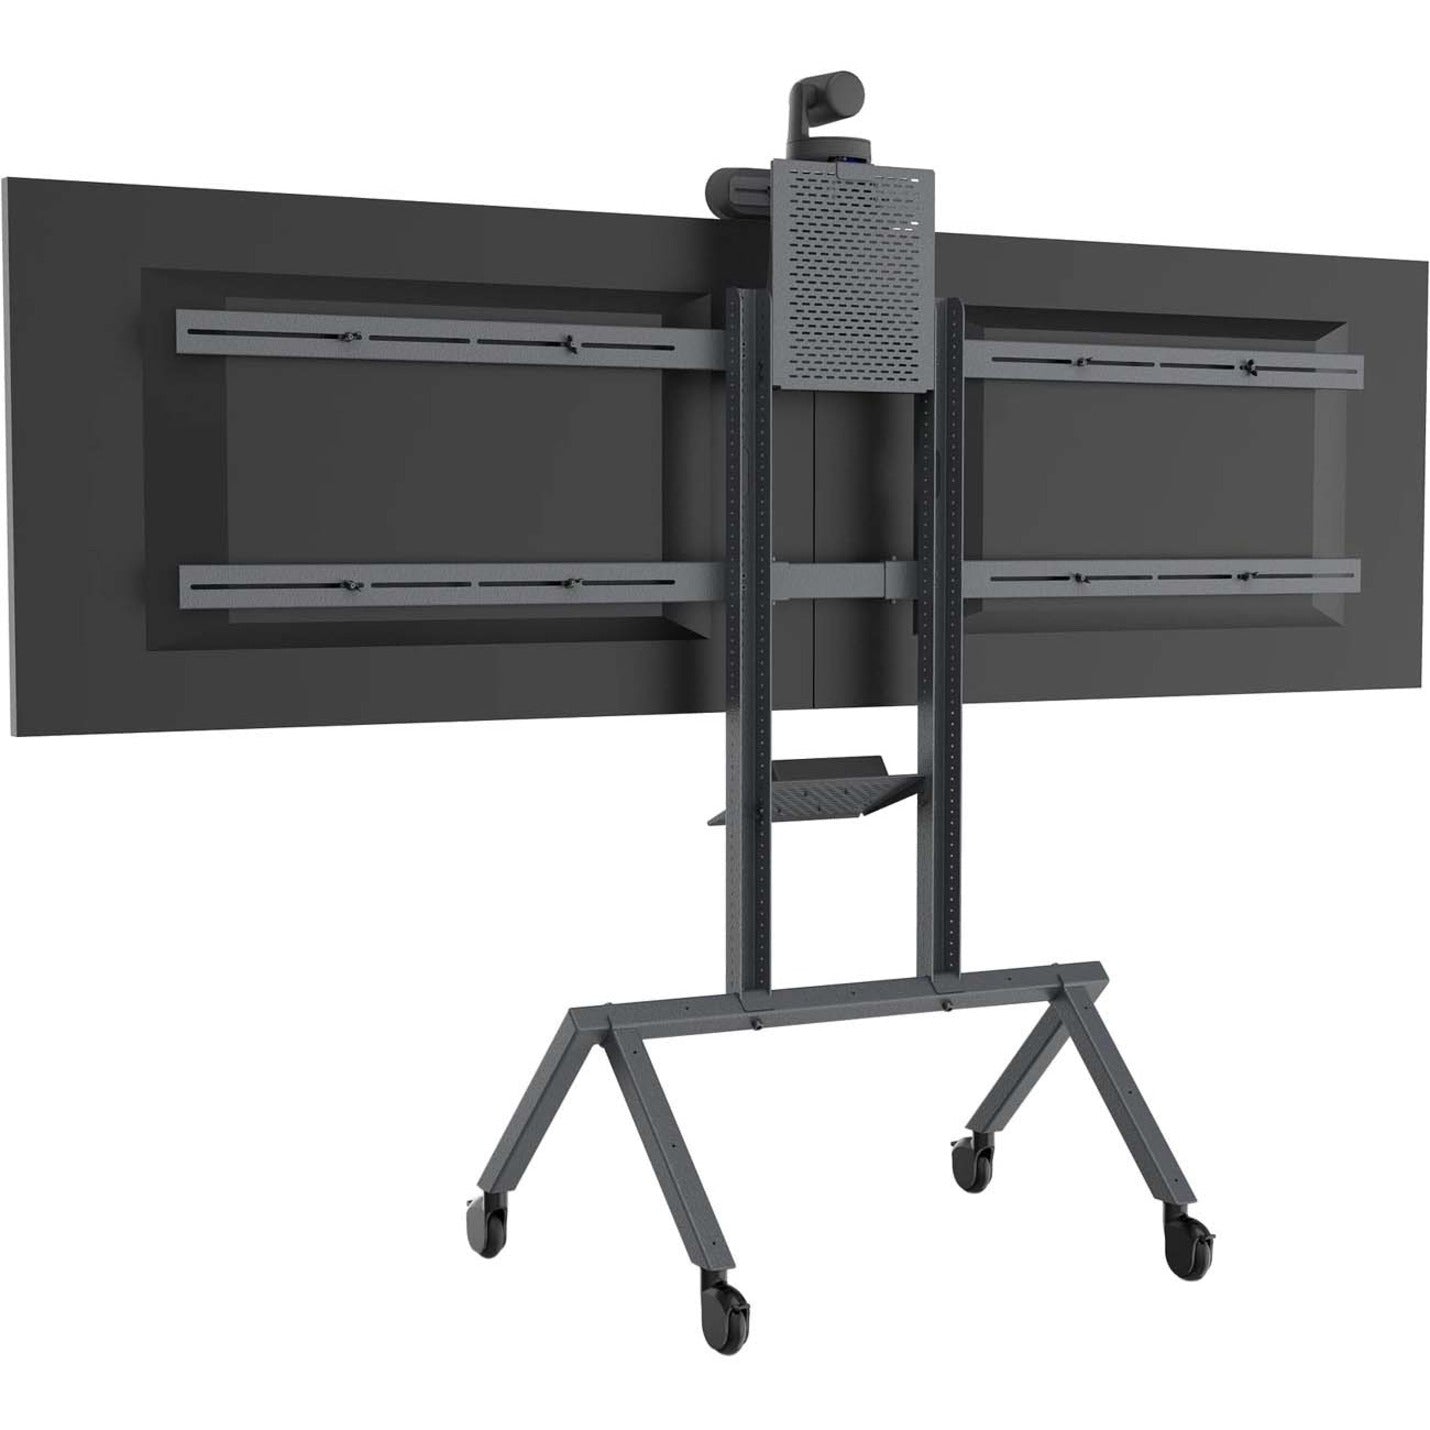 Heckler Design H701-BG Dual Display Kit for Heckler AV Cart, Durable Steel Construction, Supports 2 Displays up to 75", Black Gray